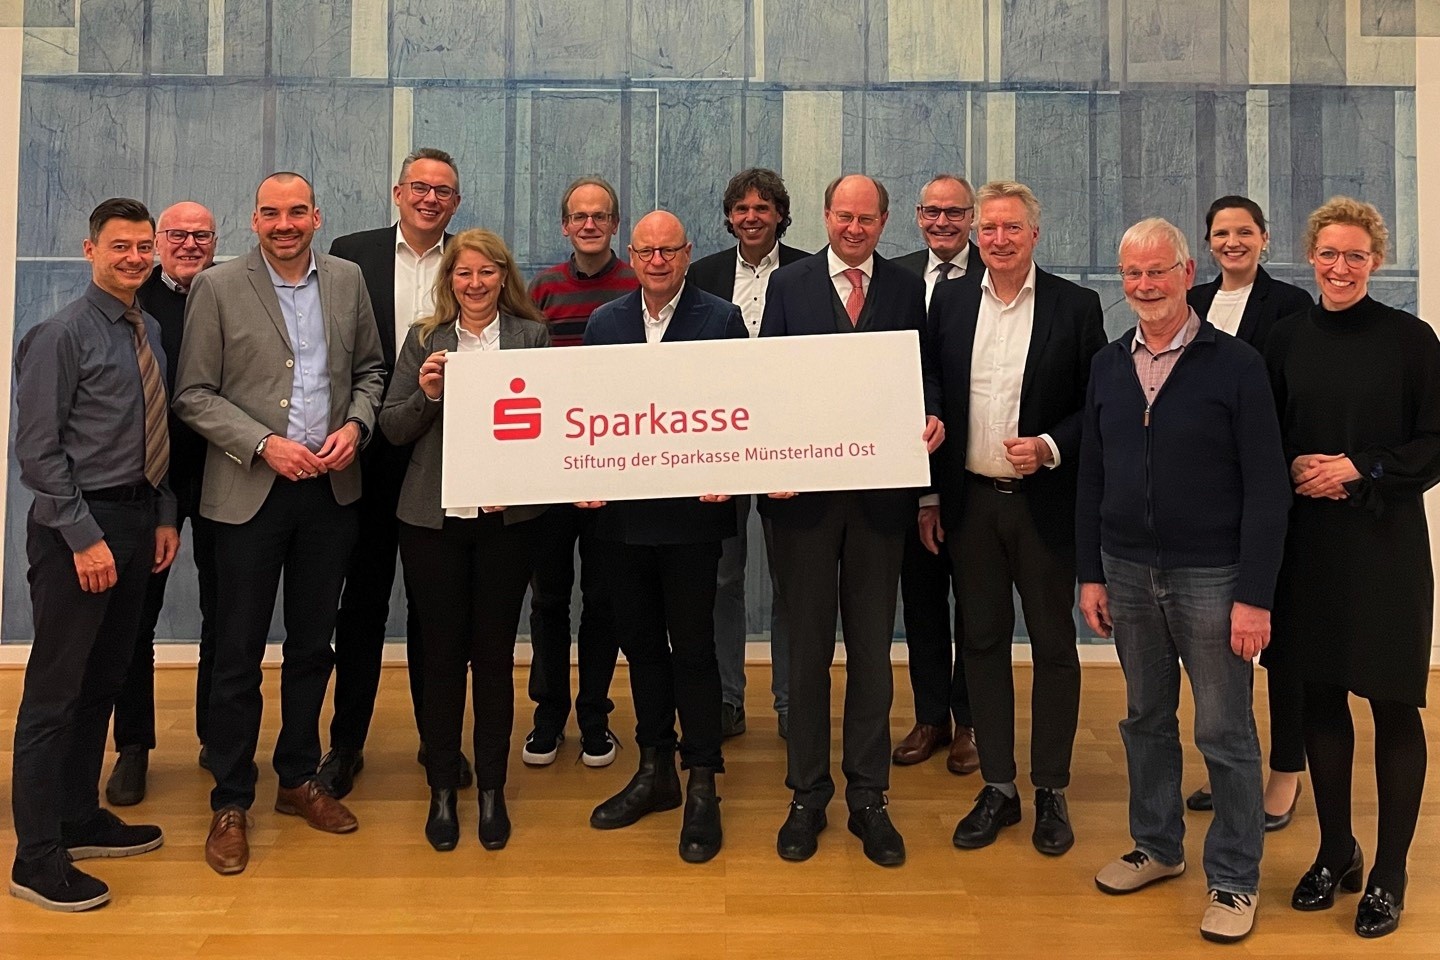 Stiftung,Förderungen,Sparkasse Münsterland Ost,Peter Scholz,Dr. Olaf Gericke,Dr. Saxe,